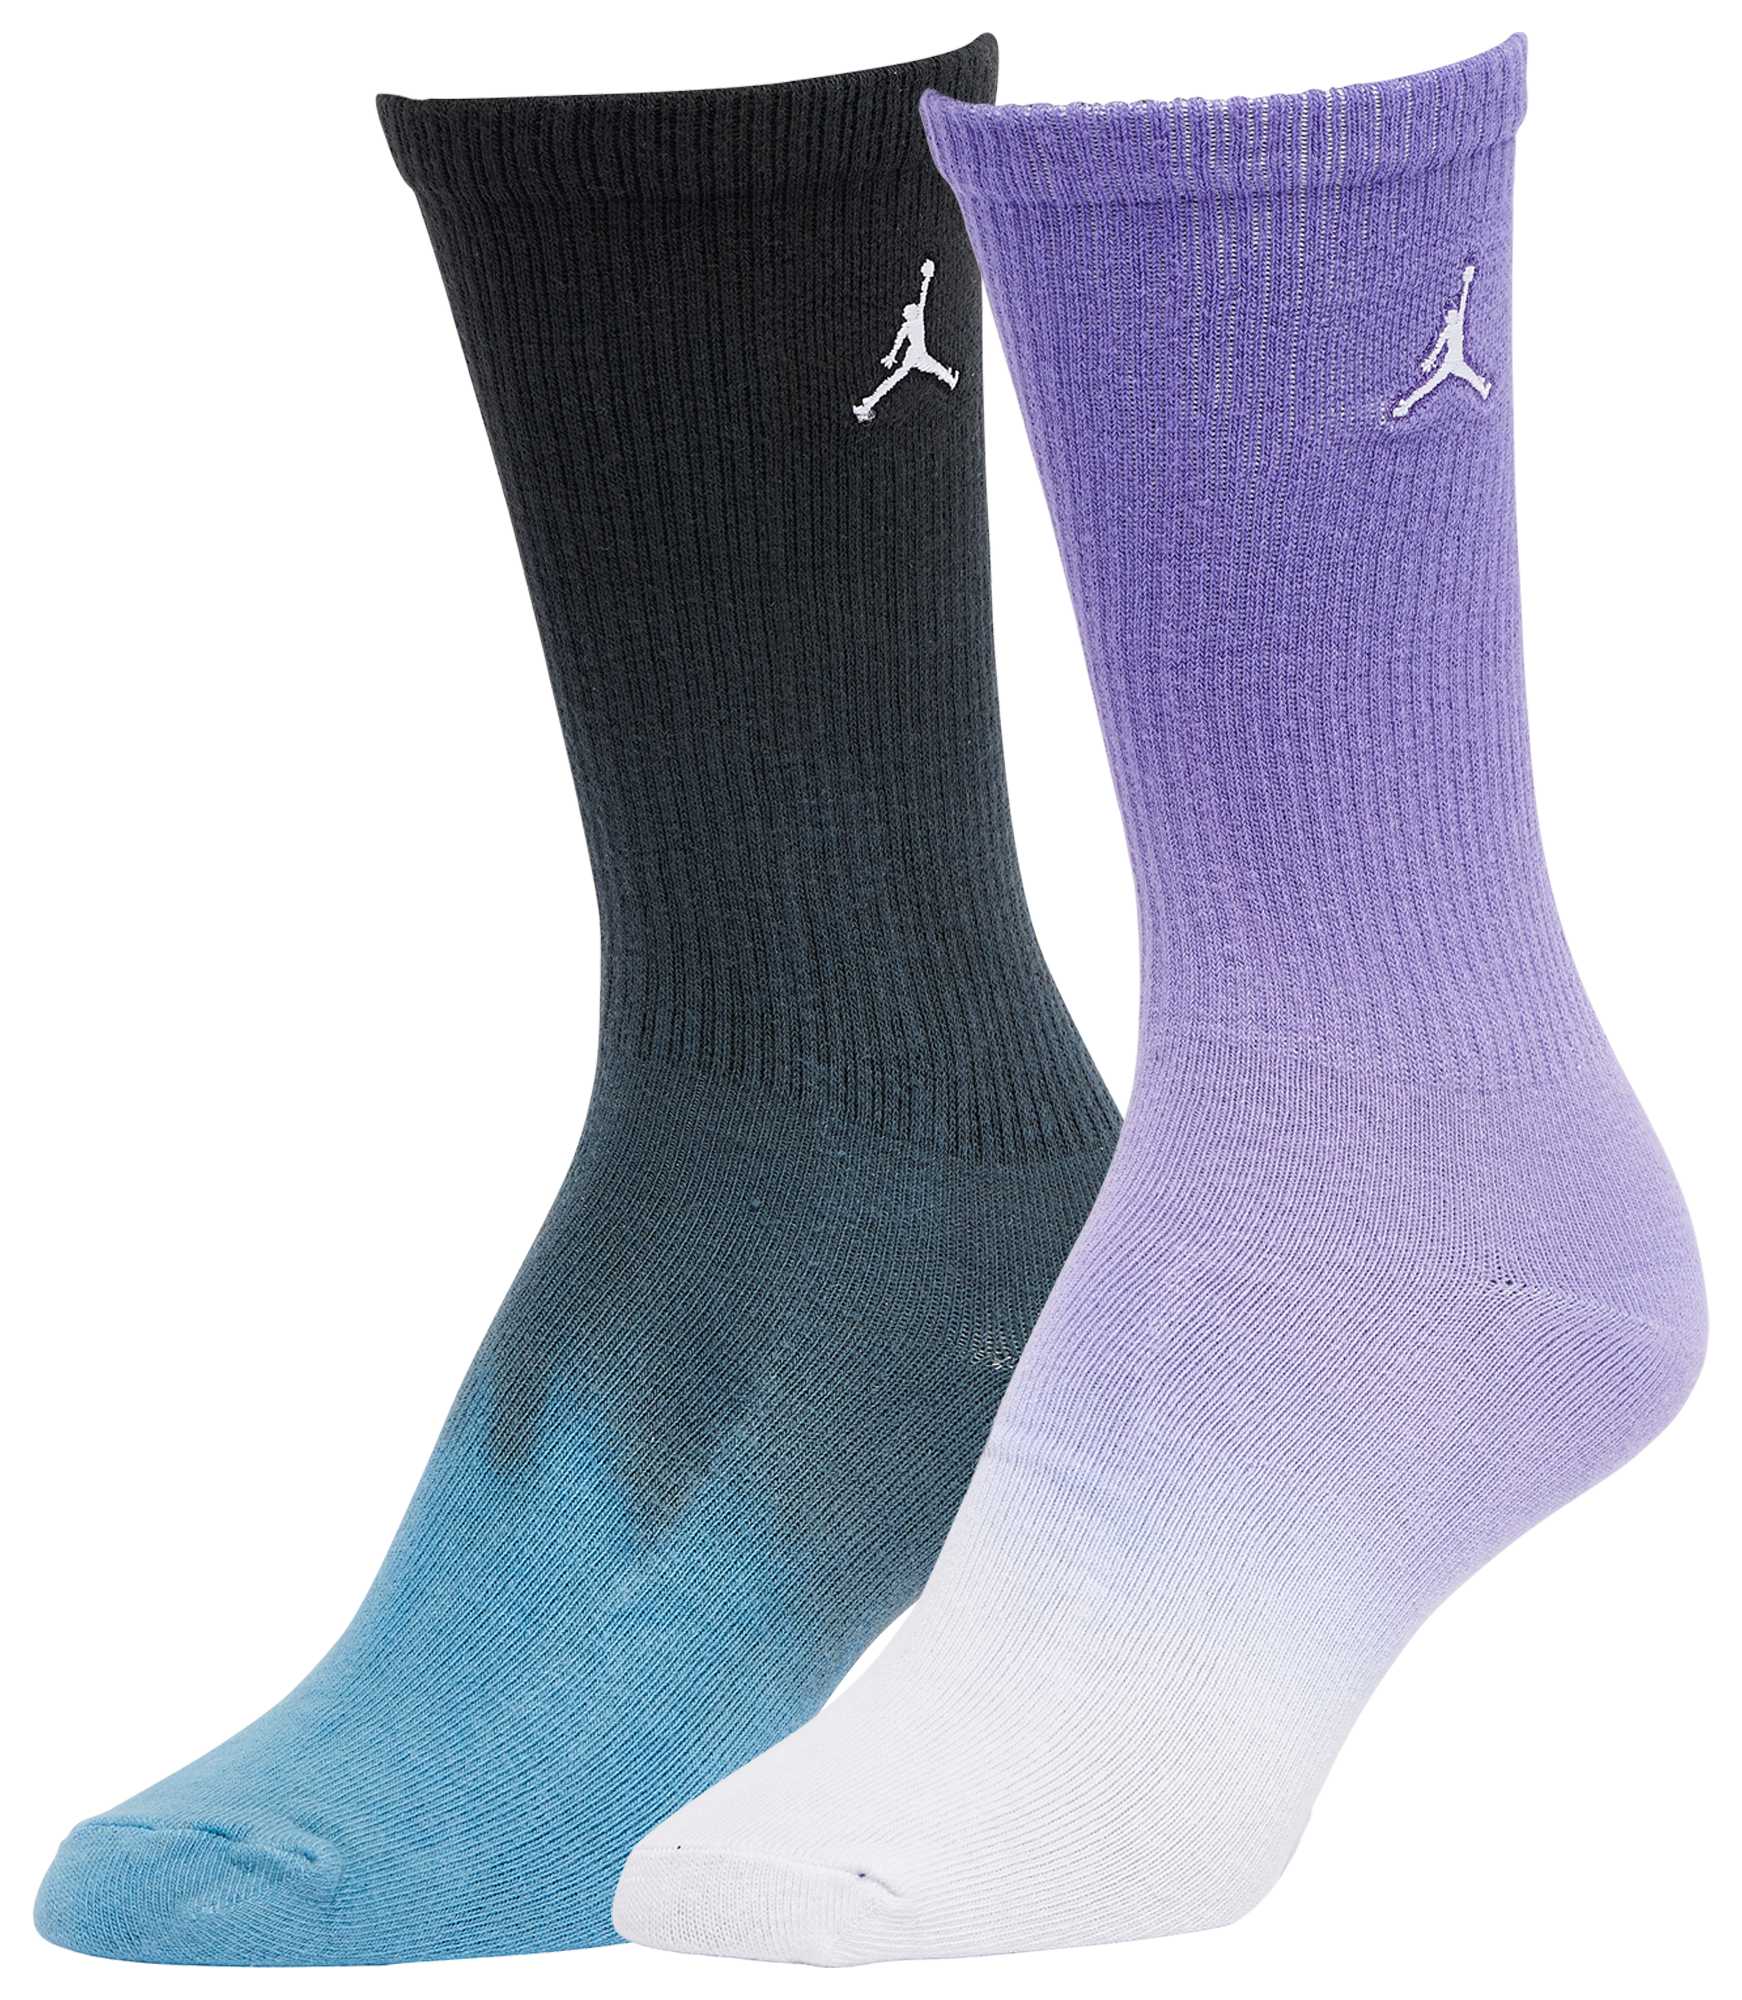 black and blue jordan socks